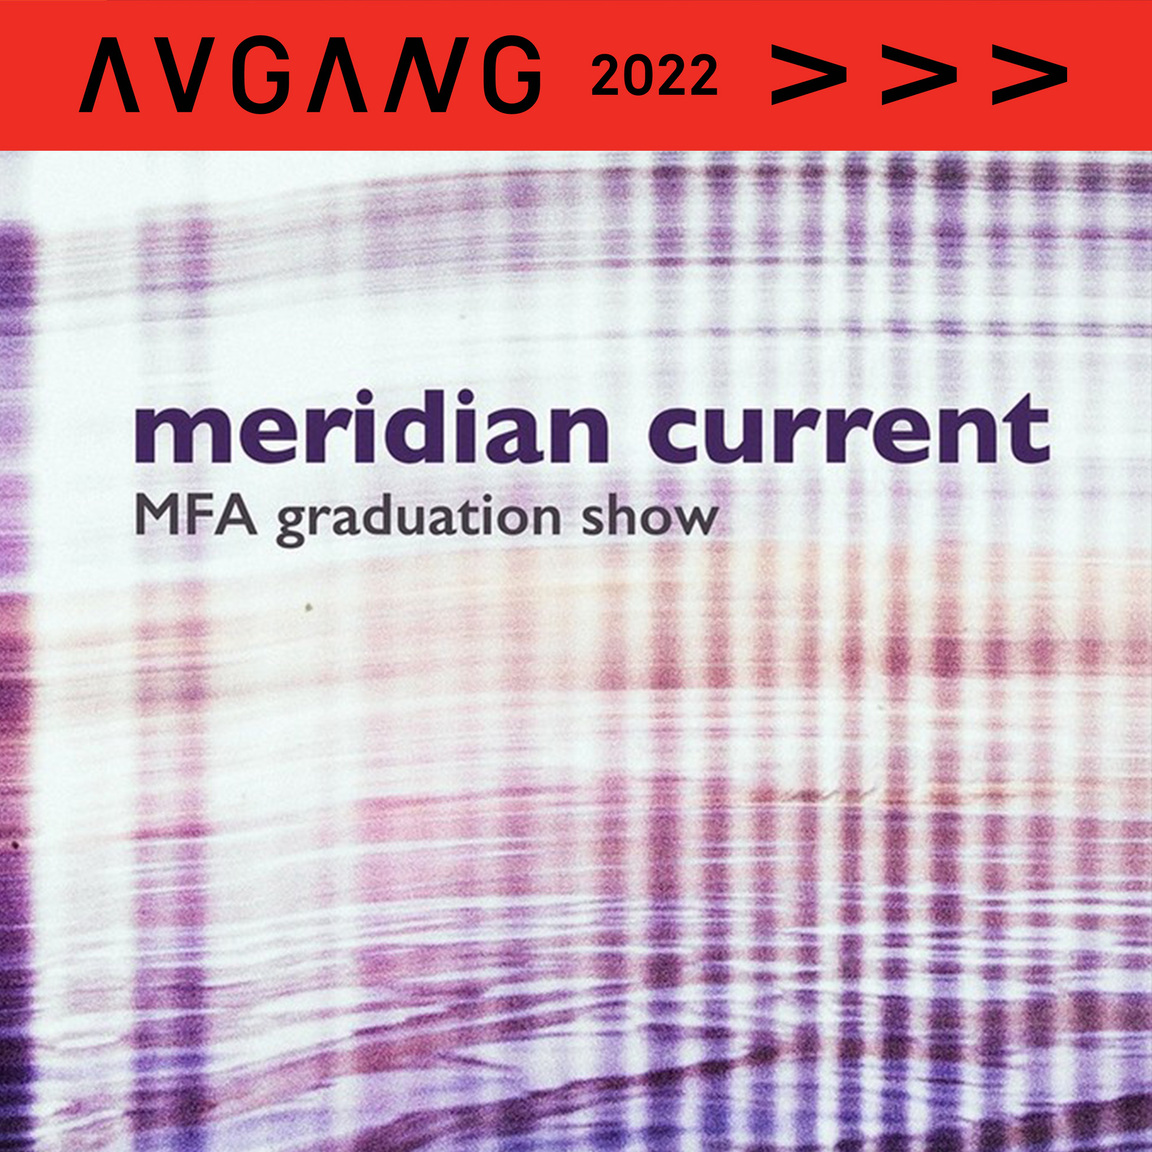 Avgang 2022: Meridian current